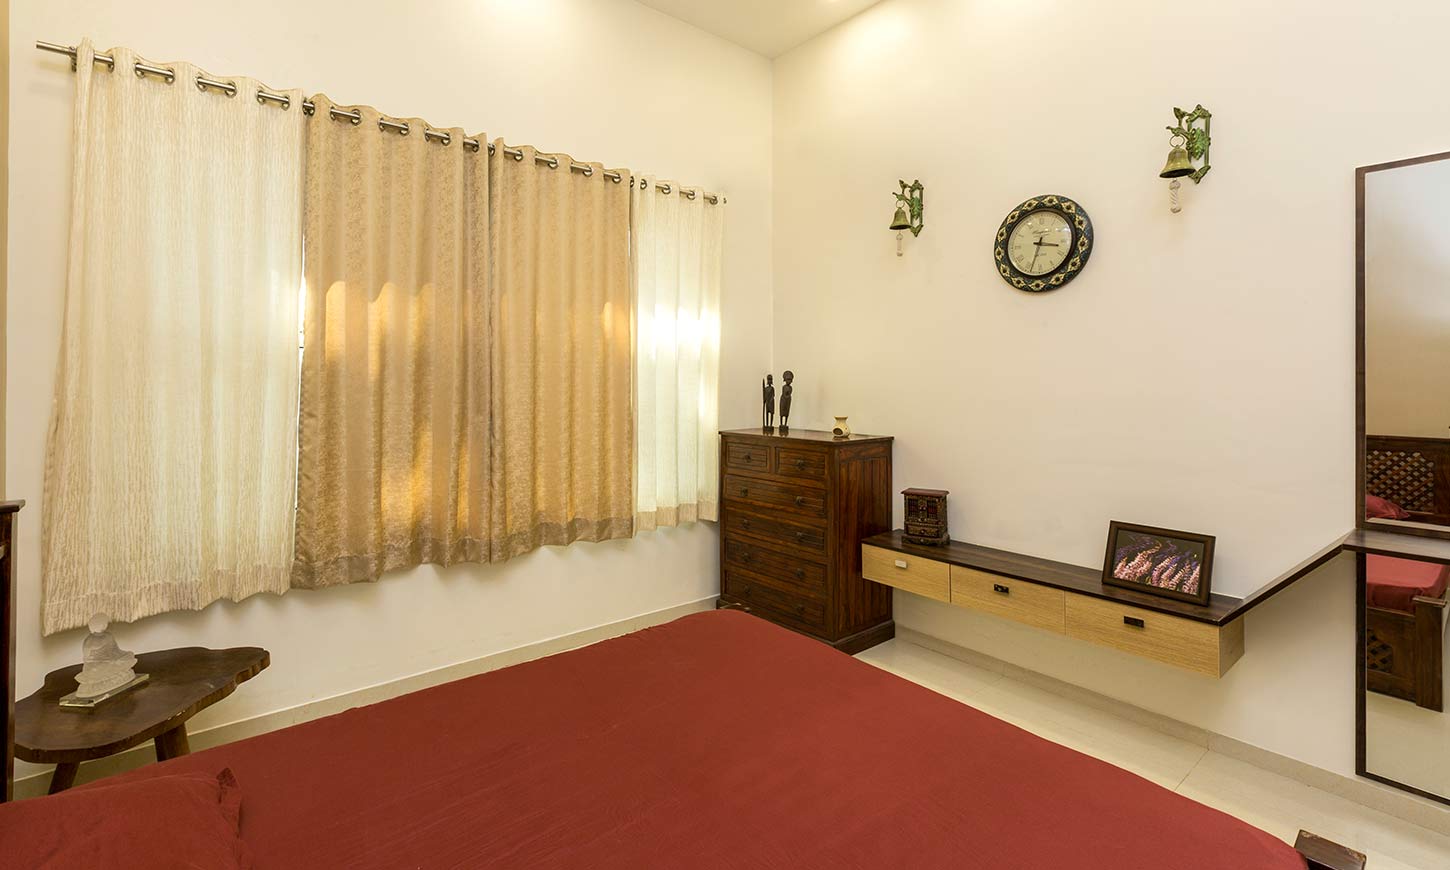 Bedroom designed by home interior decorators in bangalore